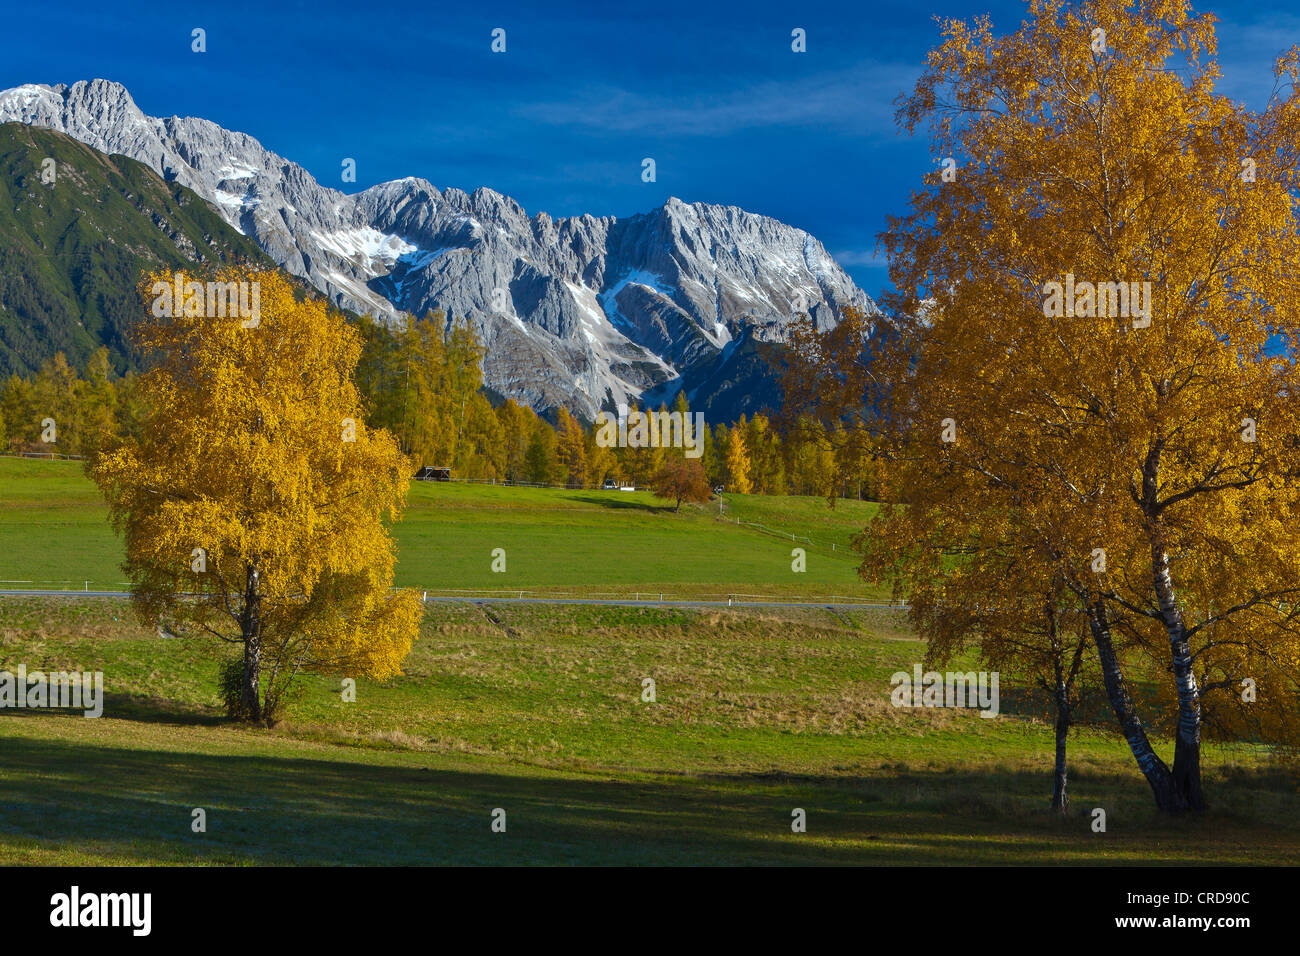 Alps in autumn, Obsteig, Austria Stock Photo